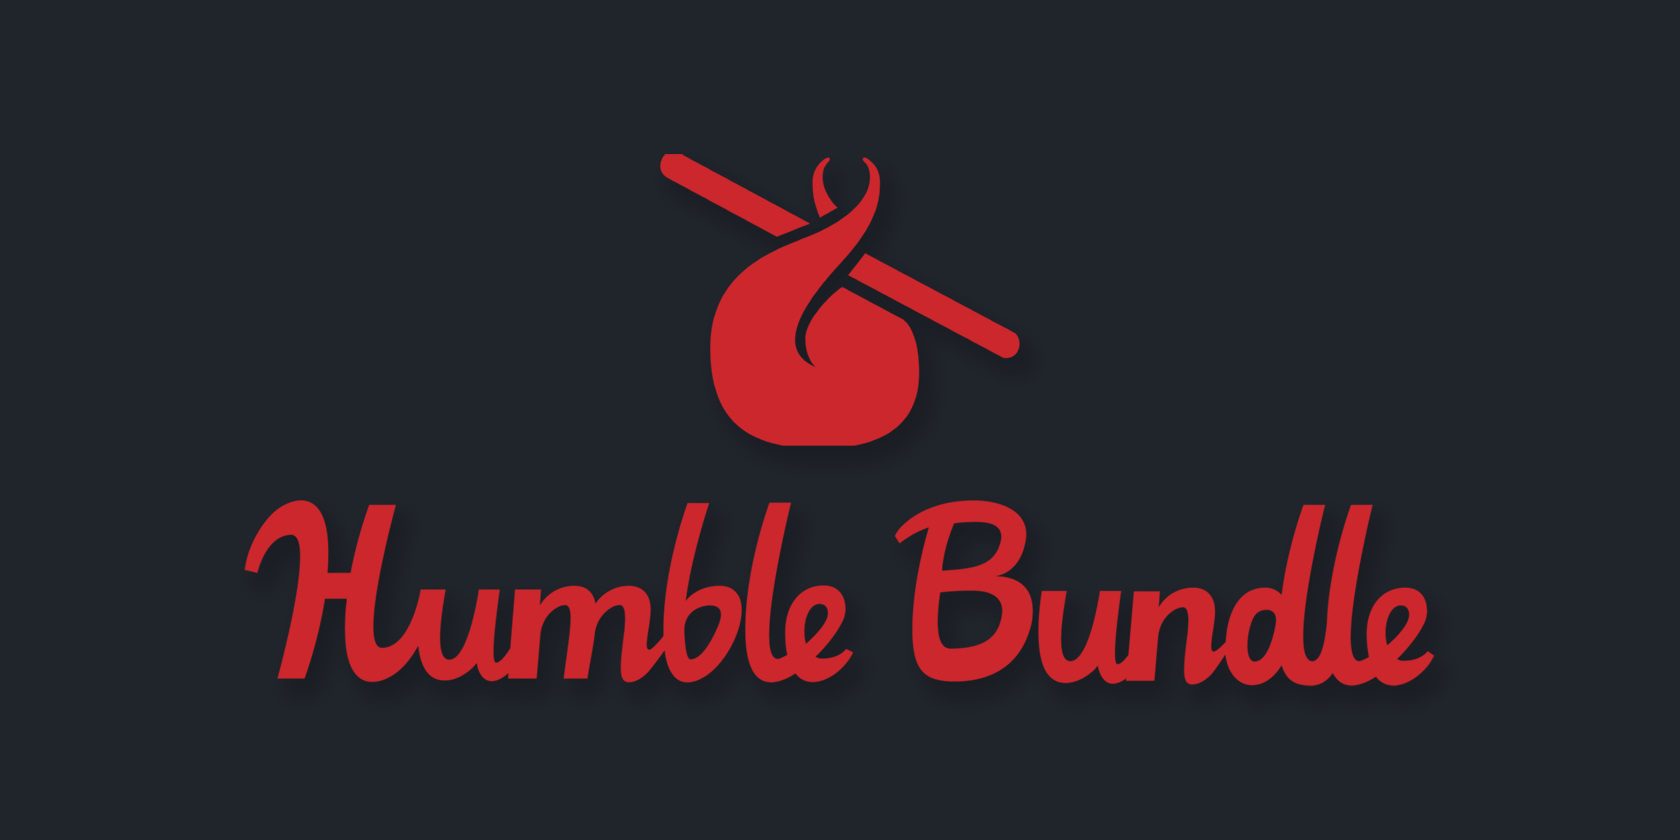 Less Humble Bundle